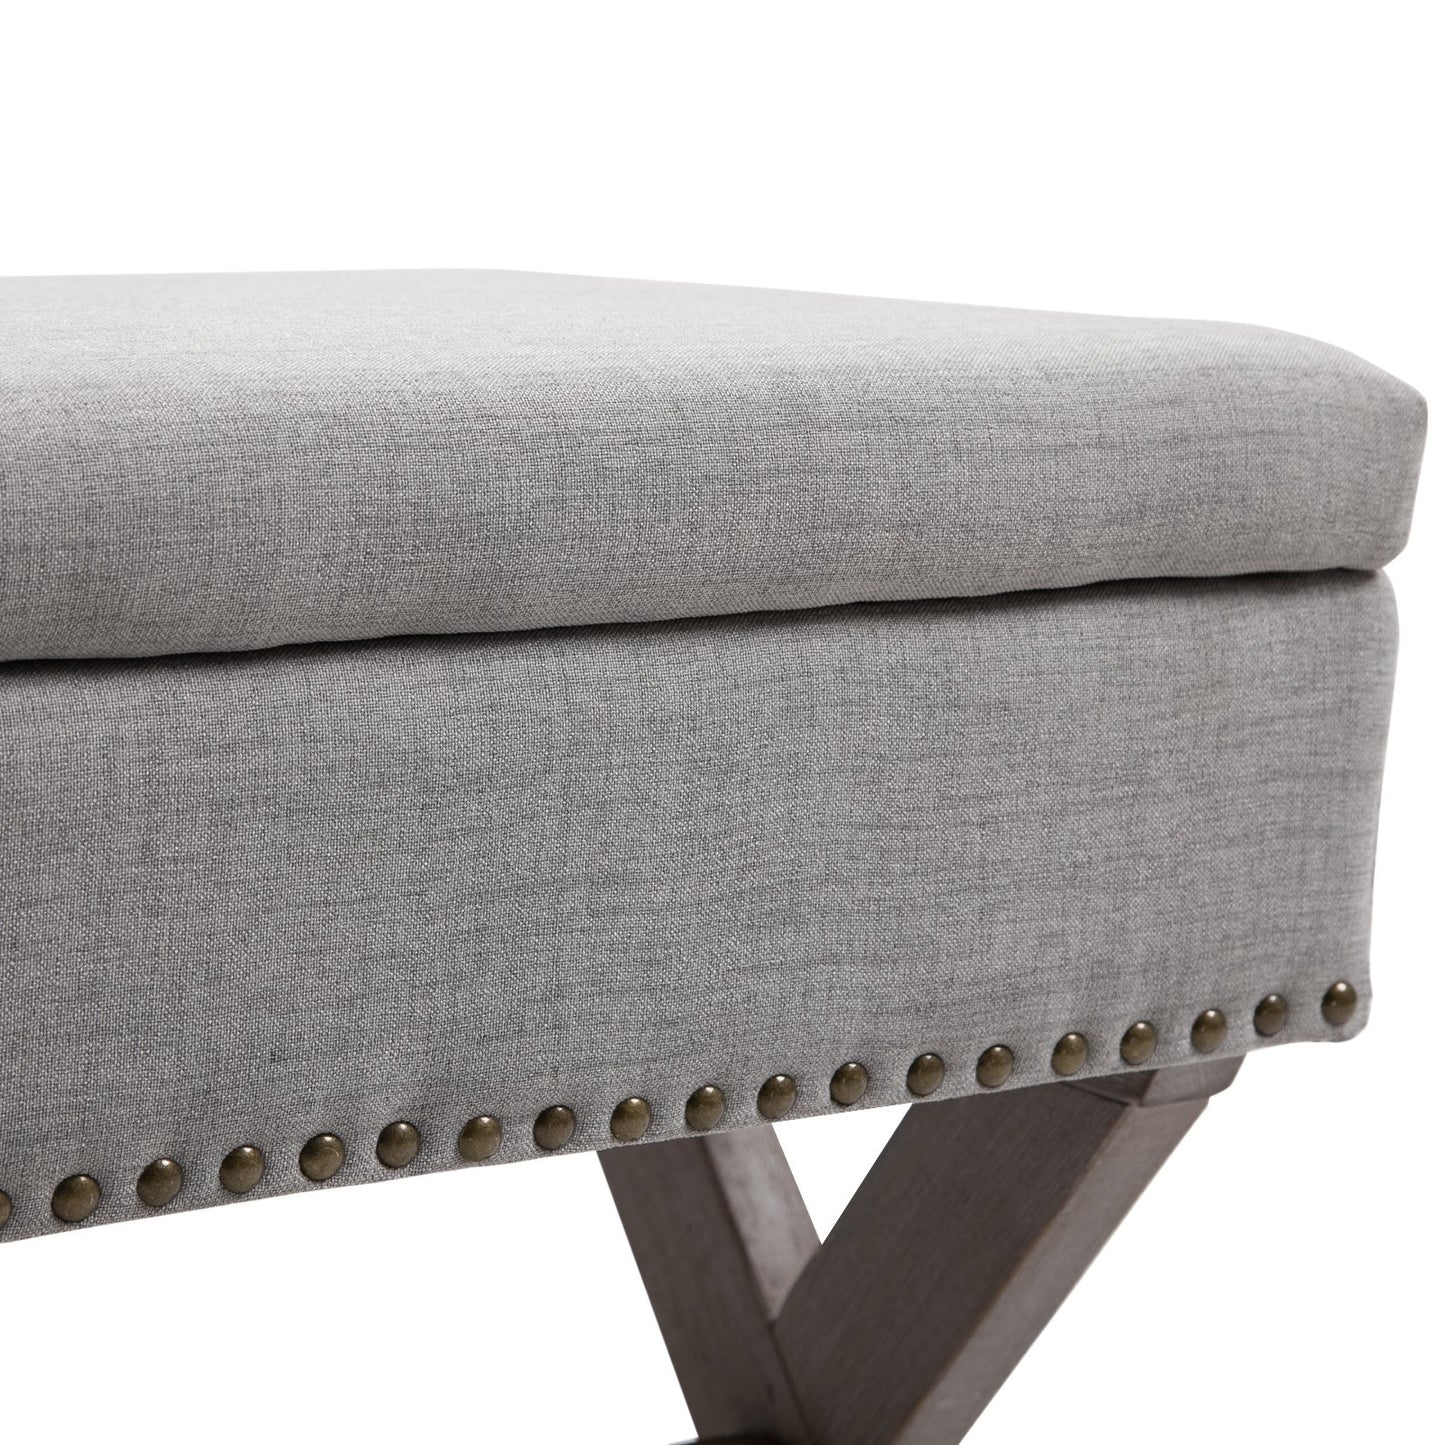 HOMCOM Storage Ottoman Bench Footstool Ottoman Polyester Upholstered Grey